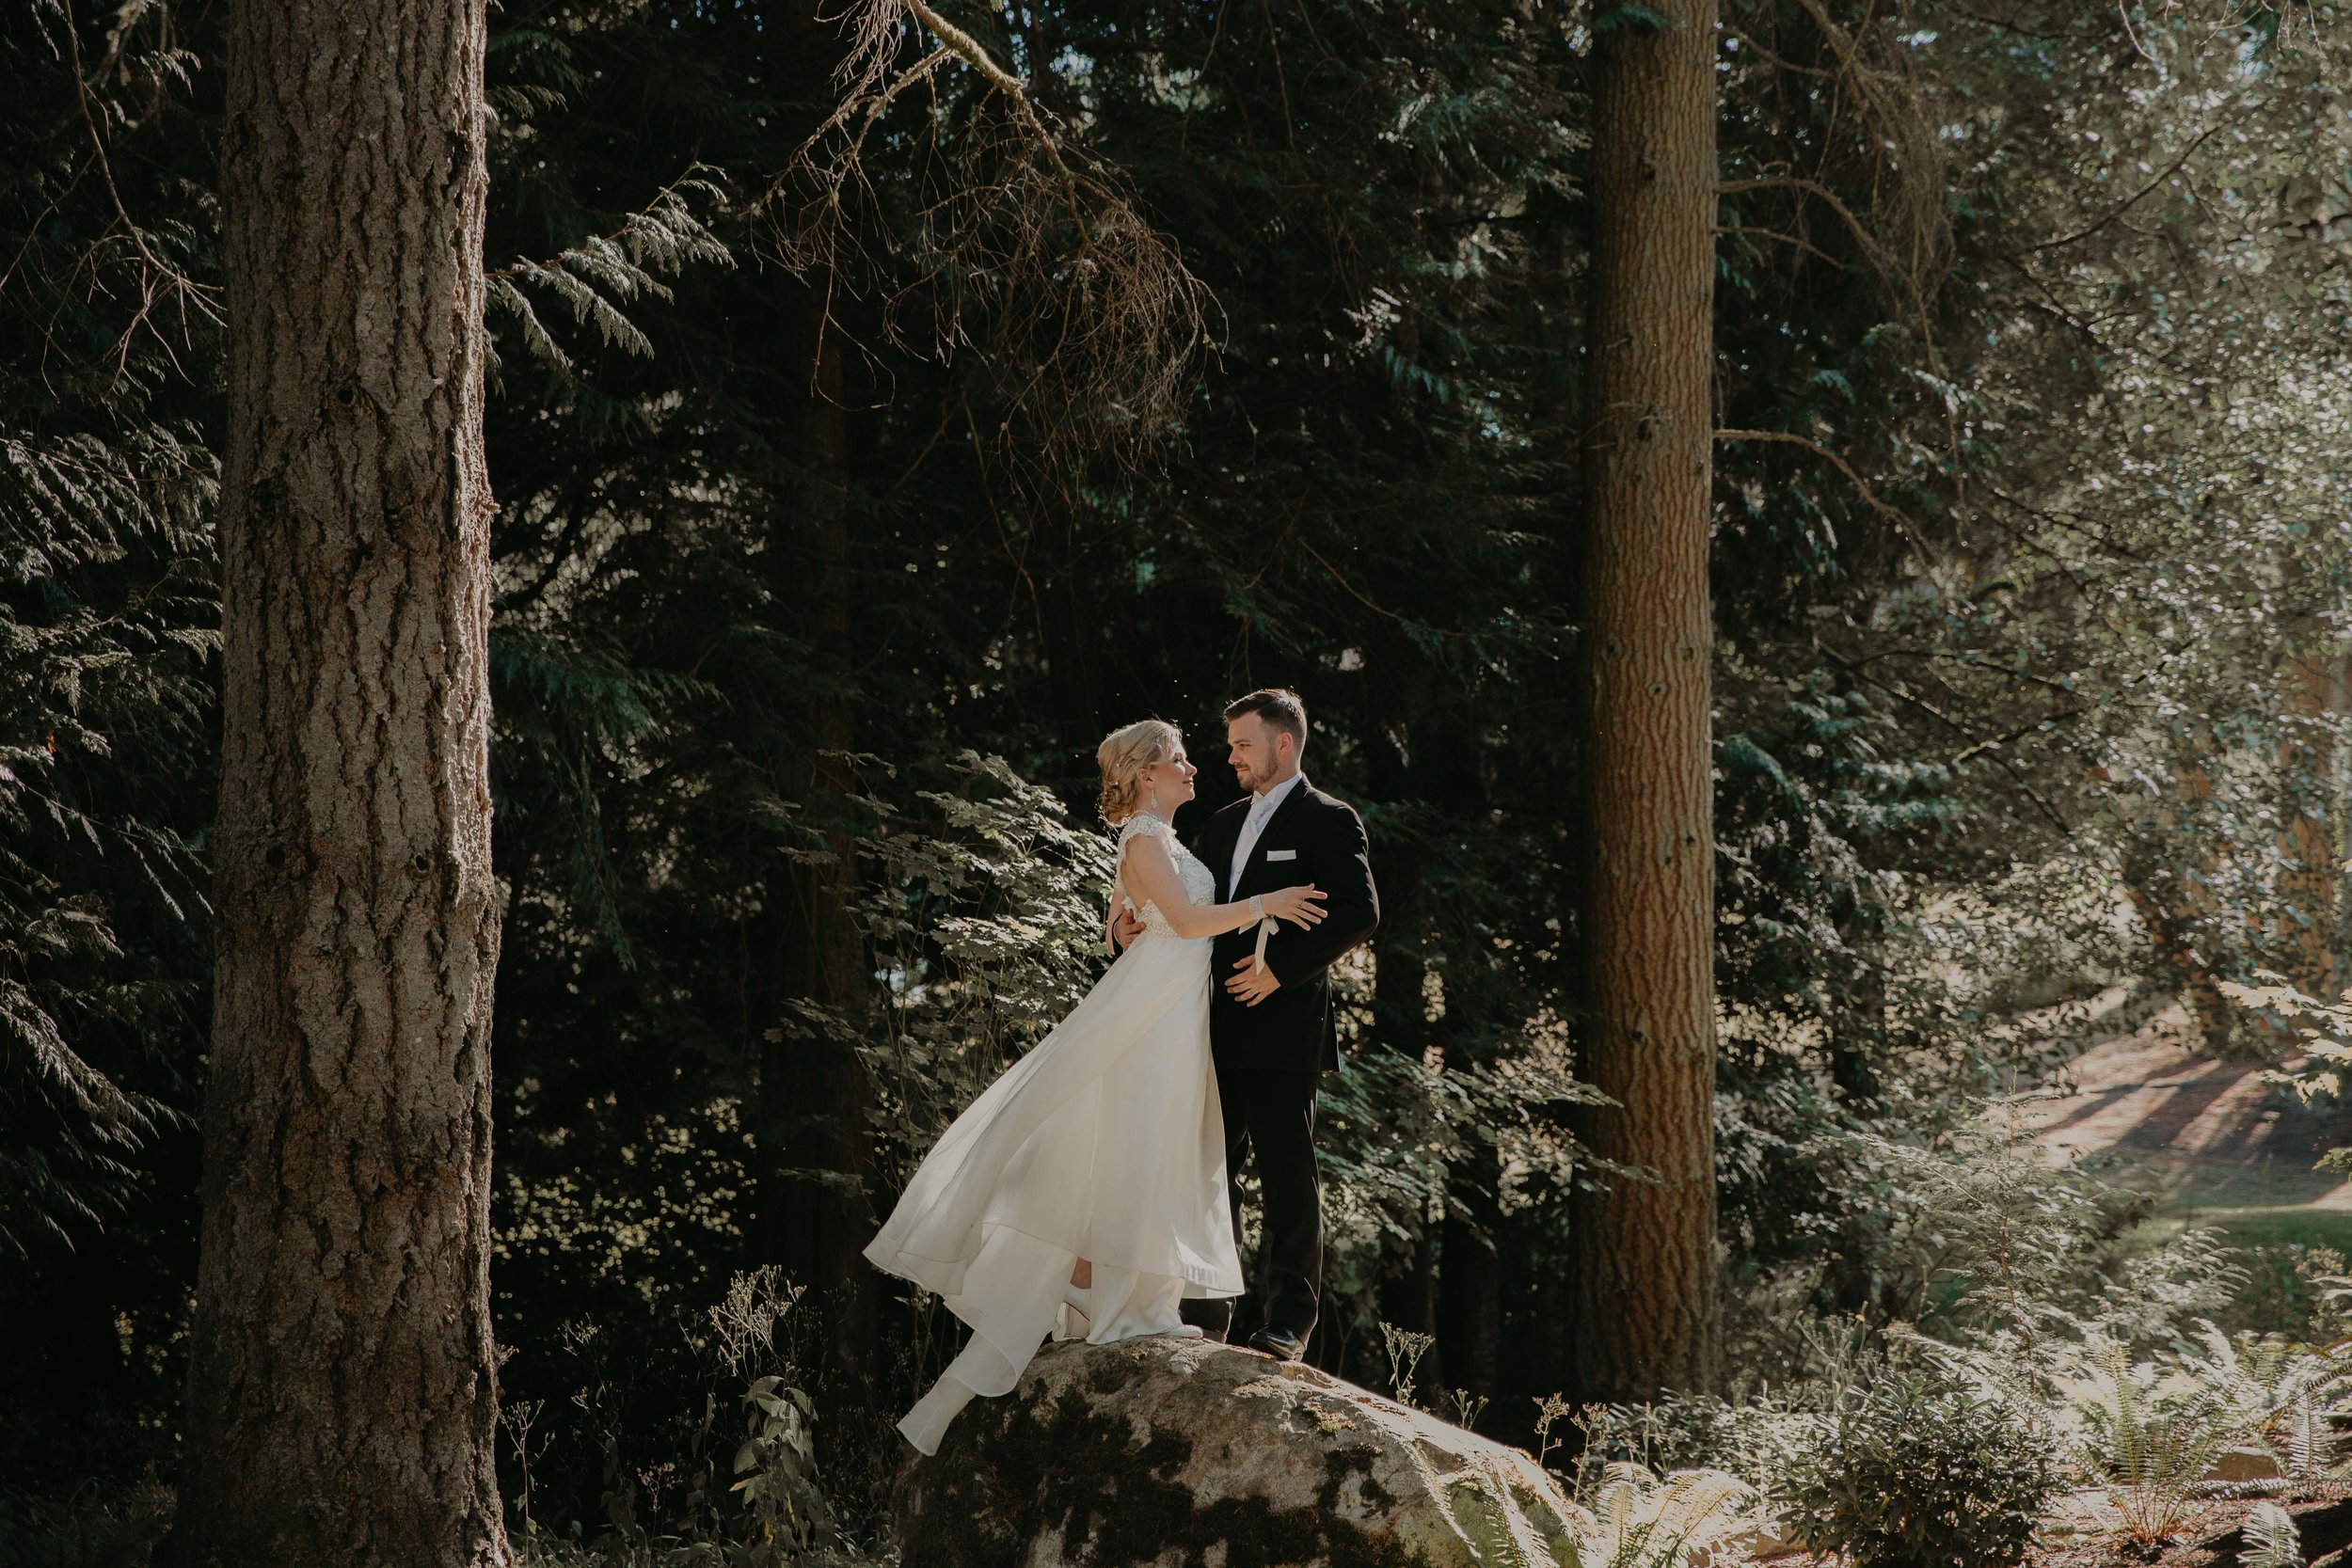 nicole-daacke-photography-kingston-house-bainbride-washington-wedding-photography-summer-wedding-lavendar-field-pacific-northwest-wedding-glam-forest-elopement-photographer-58.jpg